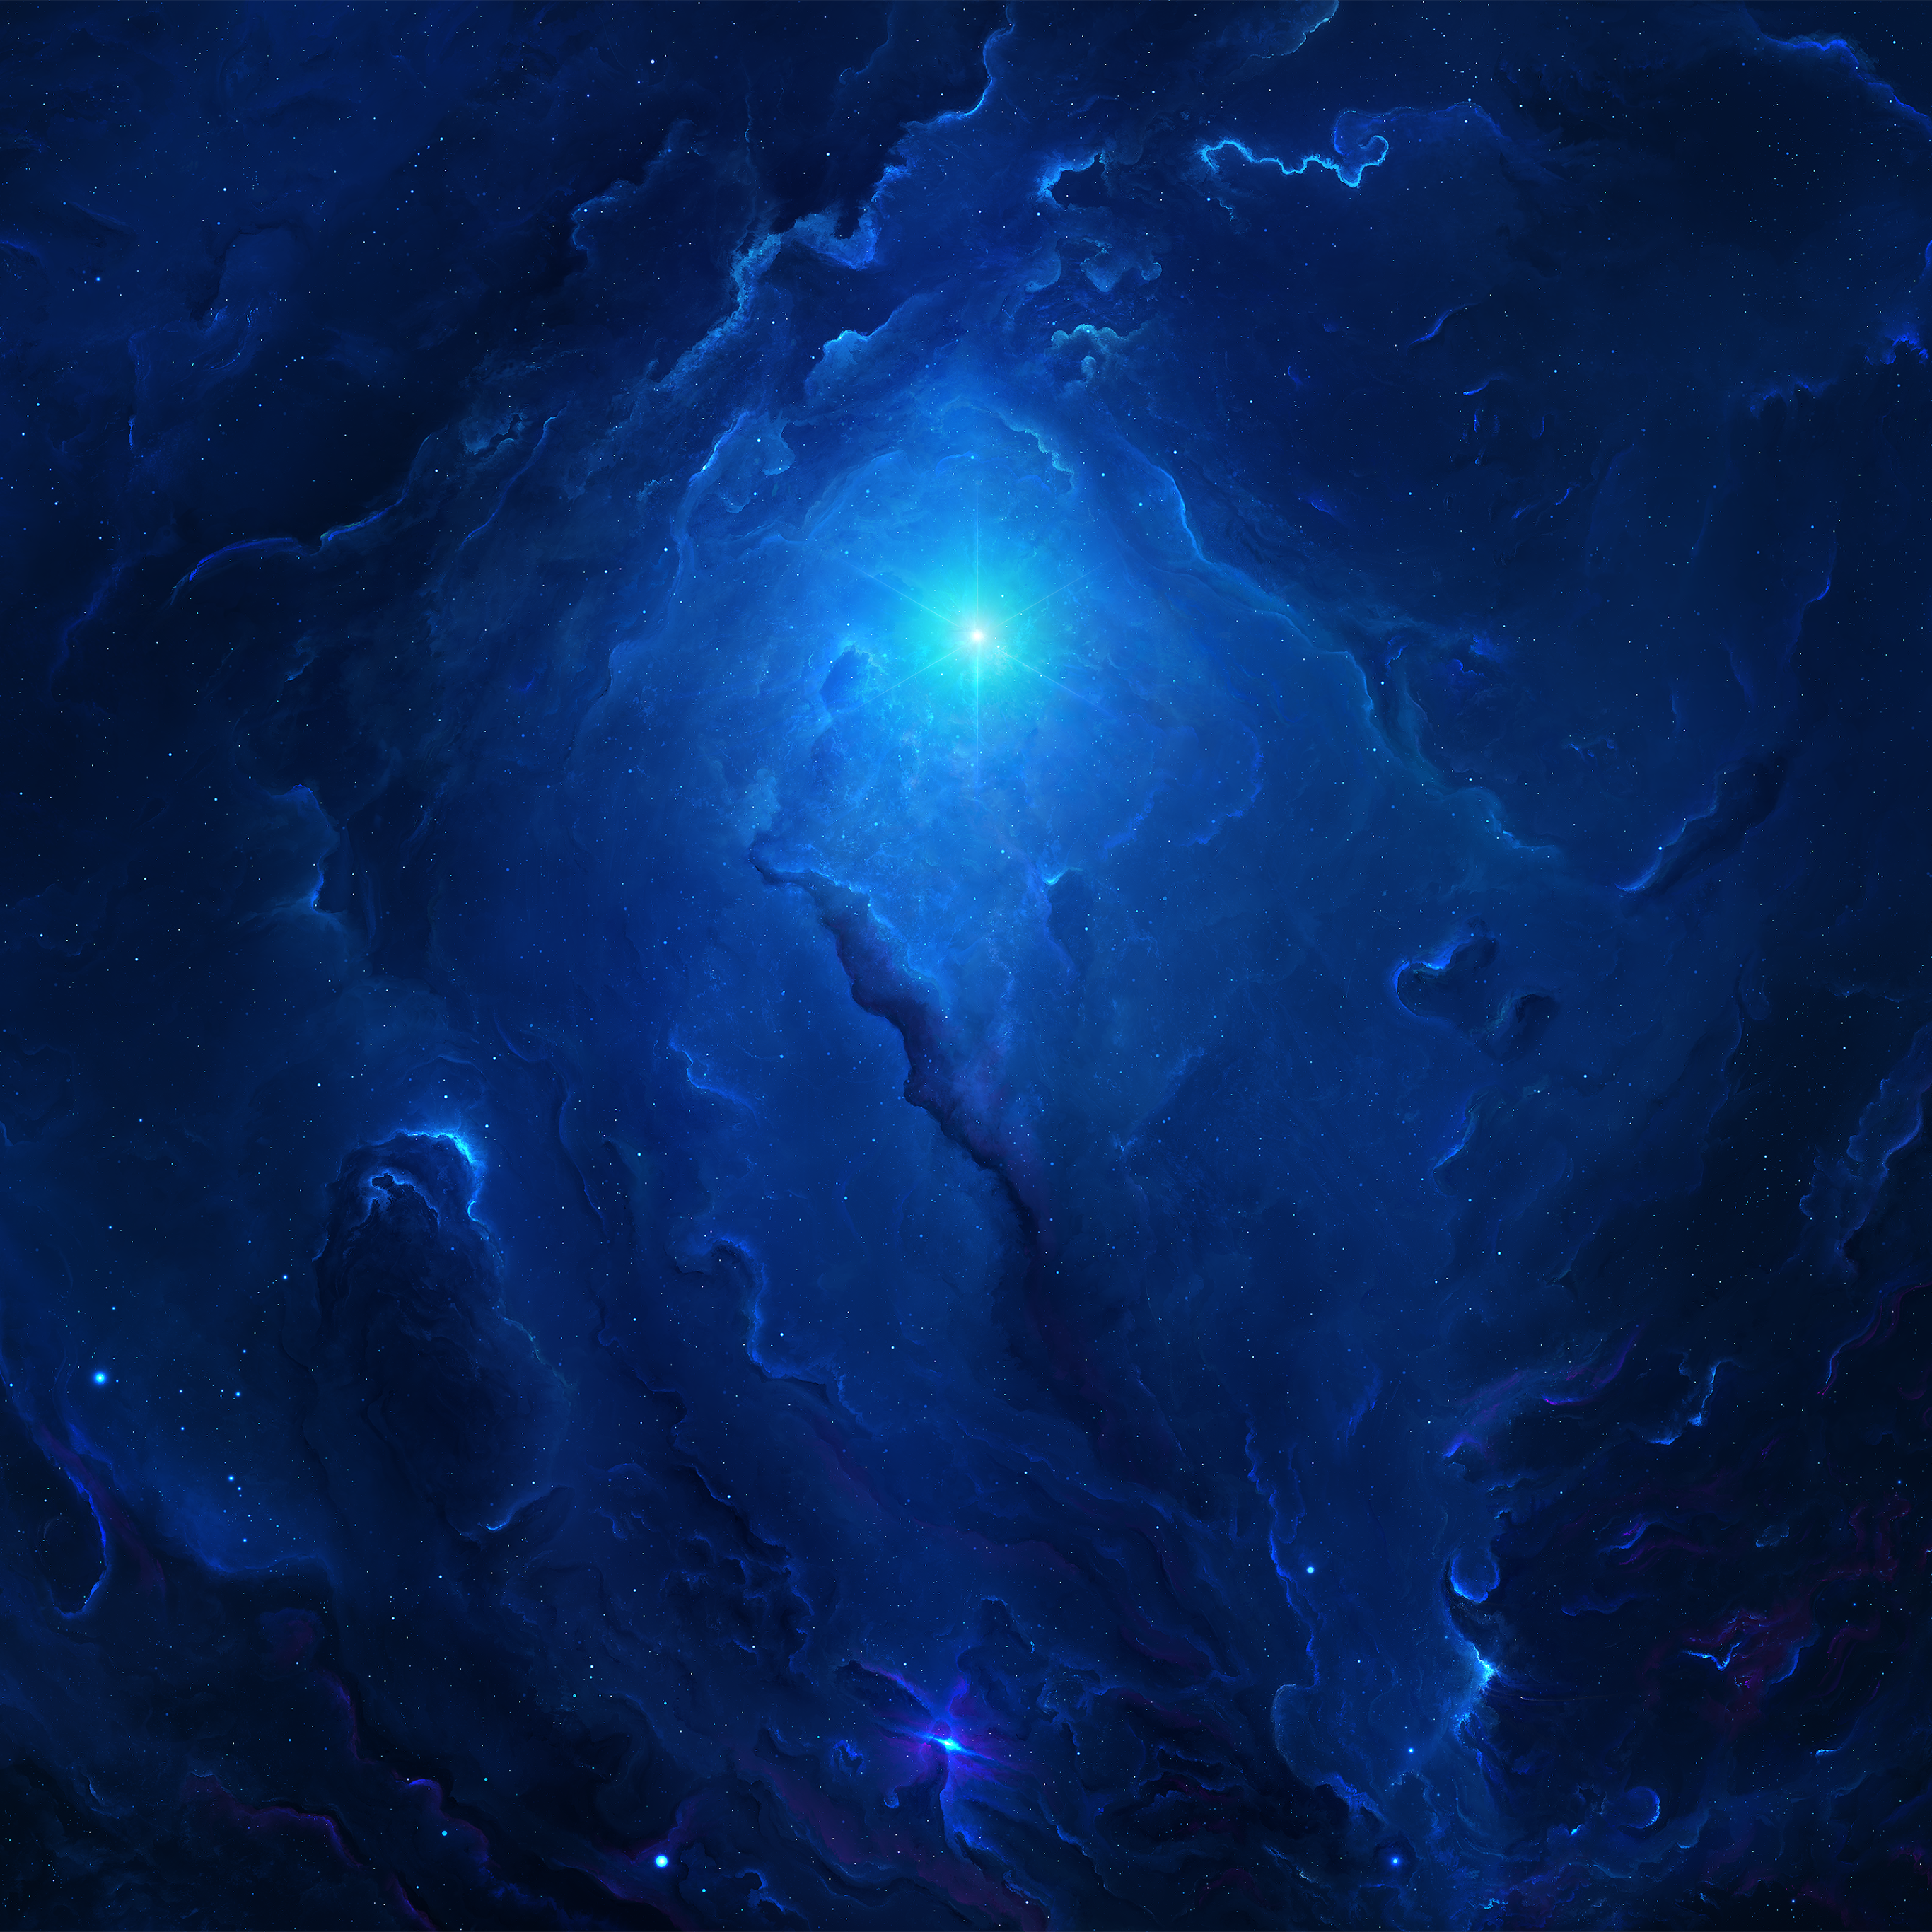 Undersea Temple Nebula by Starkiteckt